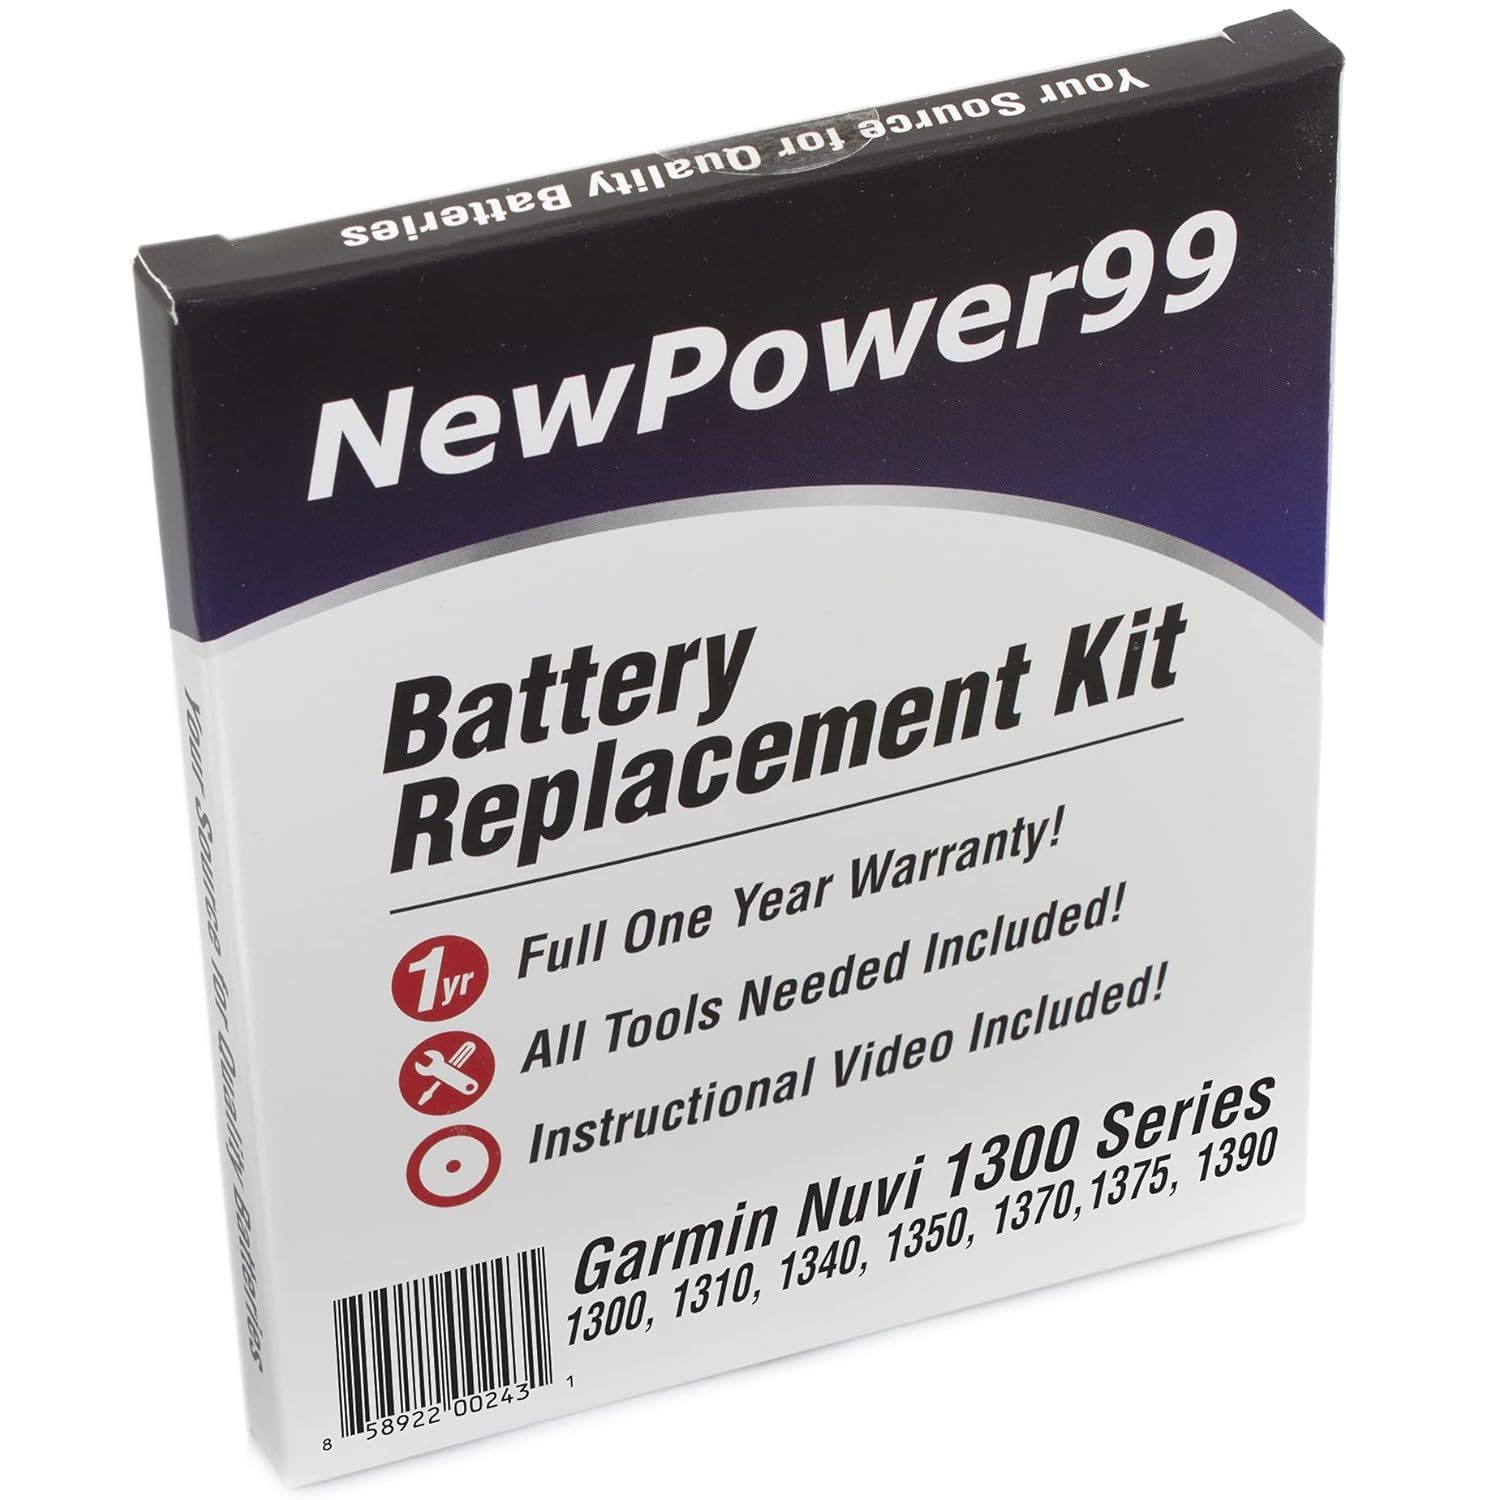 Newpower99 Battery Kit For Garmin Series - 1300, 1350, 1370, 1375, 1390, 1340, 1 - $60.99